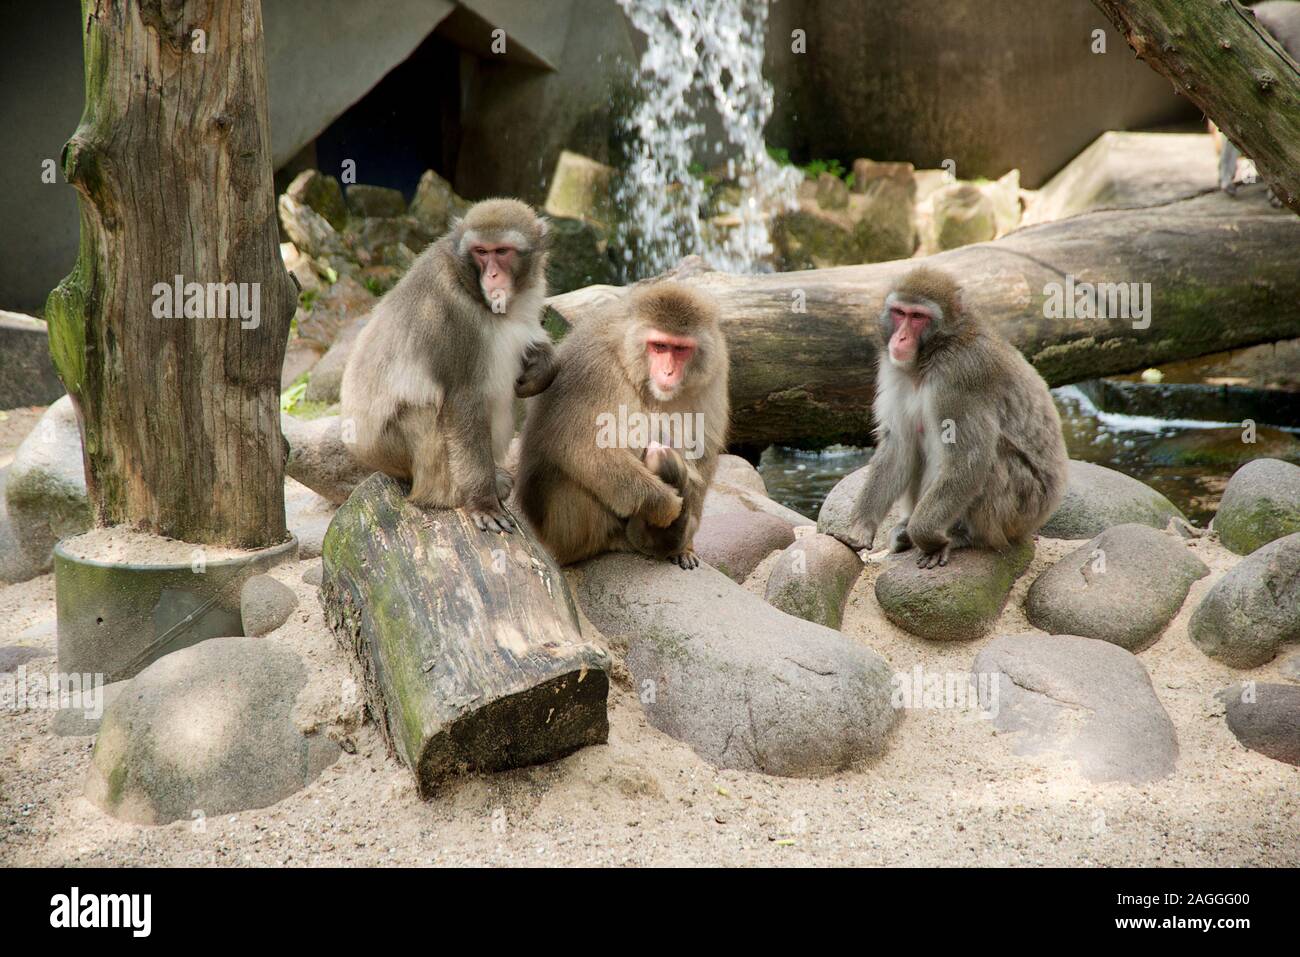 Amsterdam Zoo Three monkeys/baboons in enclosure Stock Photo